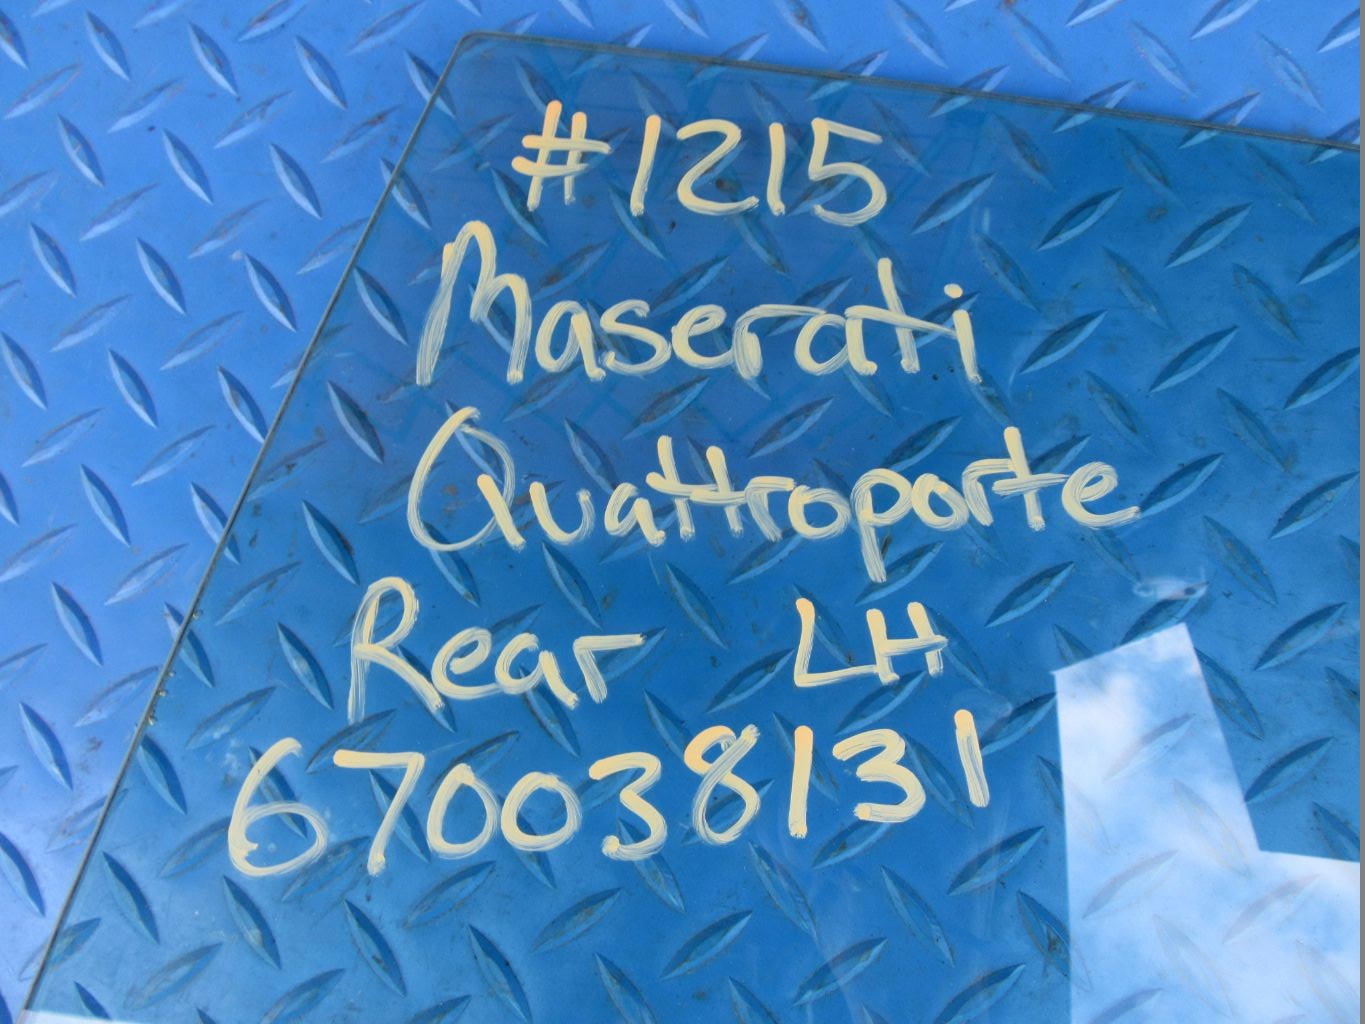 Maserati Quattroporte left rear door window glass #1215